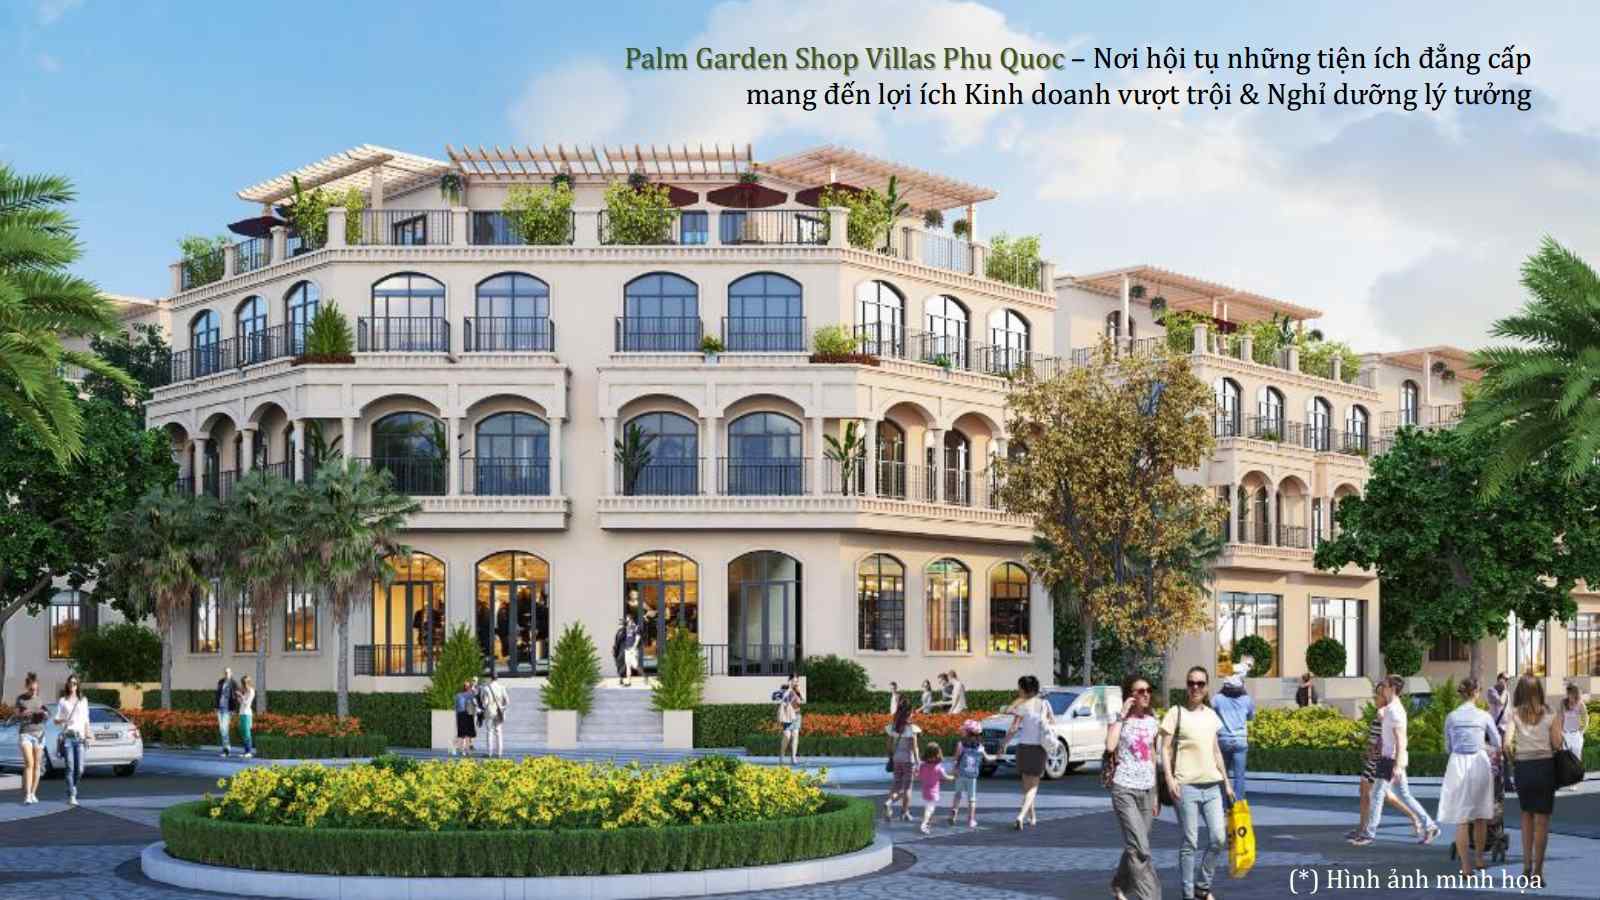 Palm Garden Shop Villas Phu Quoc